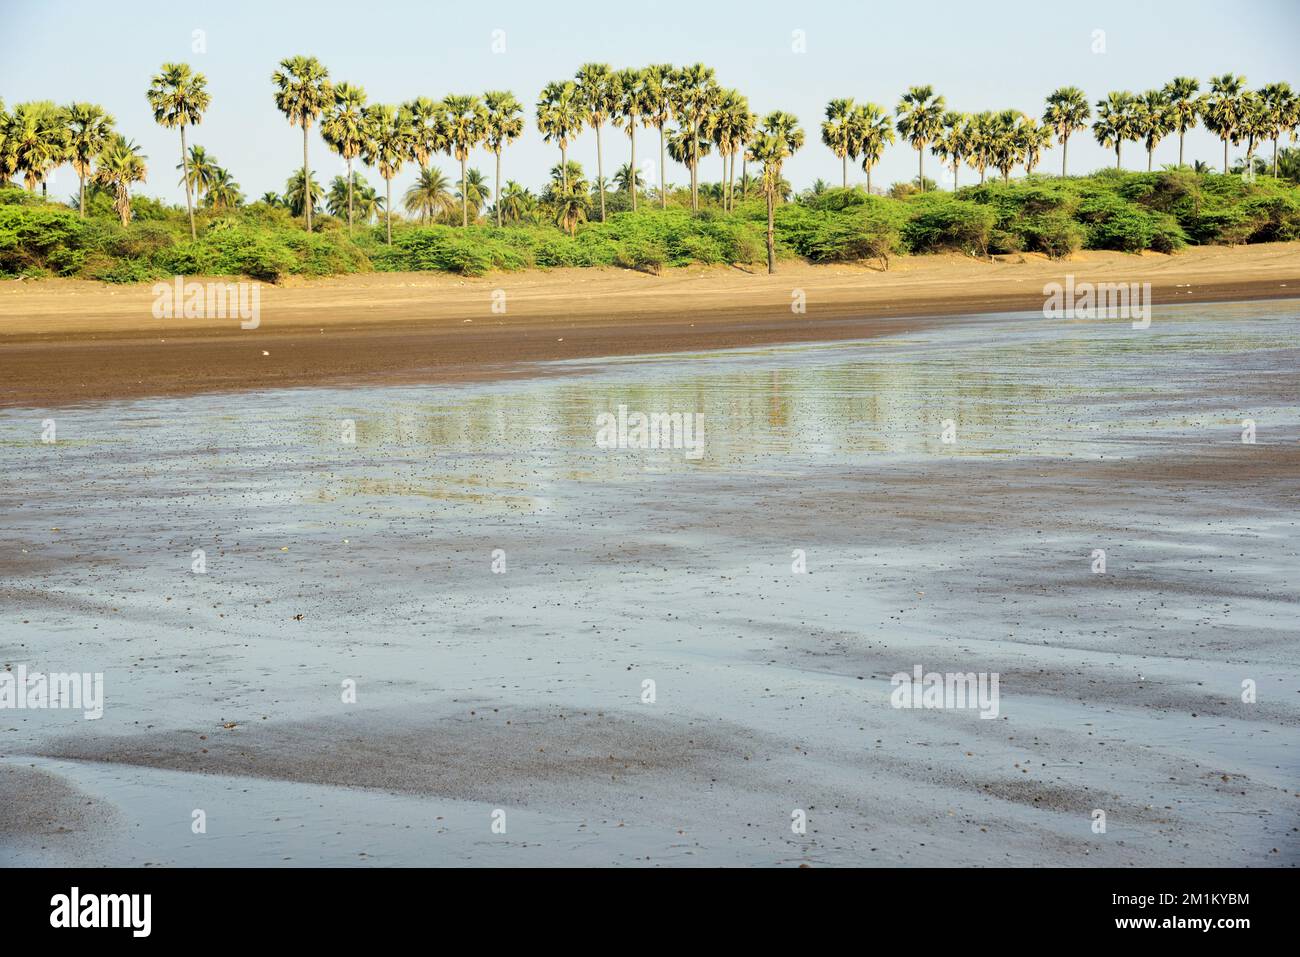 Palm trees on beach, Bhagal beach, Valsad, Gujarat, India, Asia Stock Photo